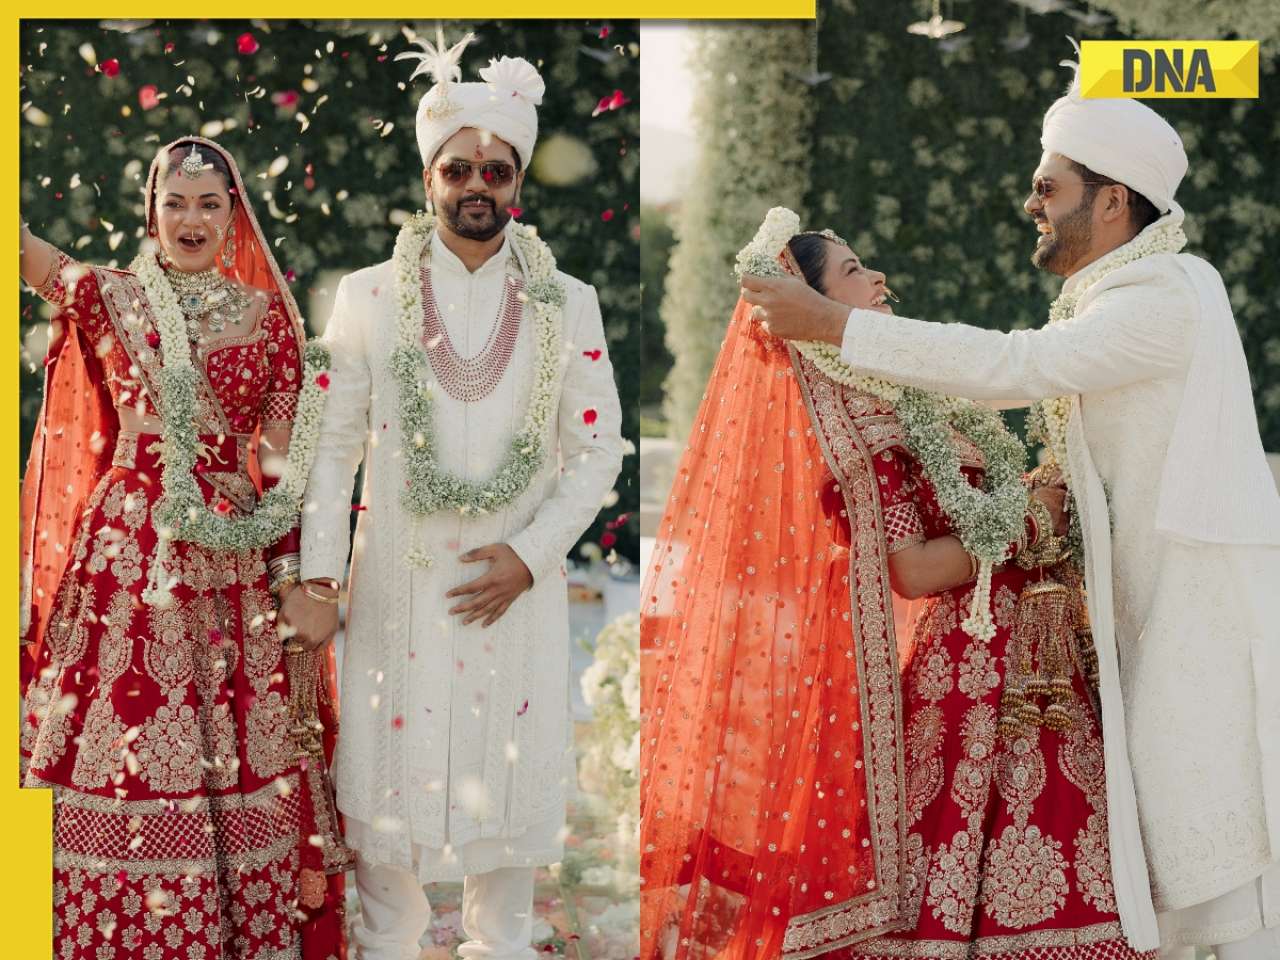 Meera Chopra ties the knot with Rakshit Kejriwal in Jaipur, shares dreamy wedding photos: 'Har janam tere sath'